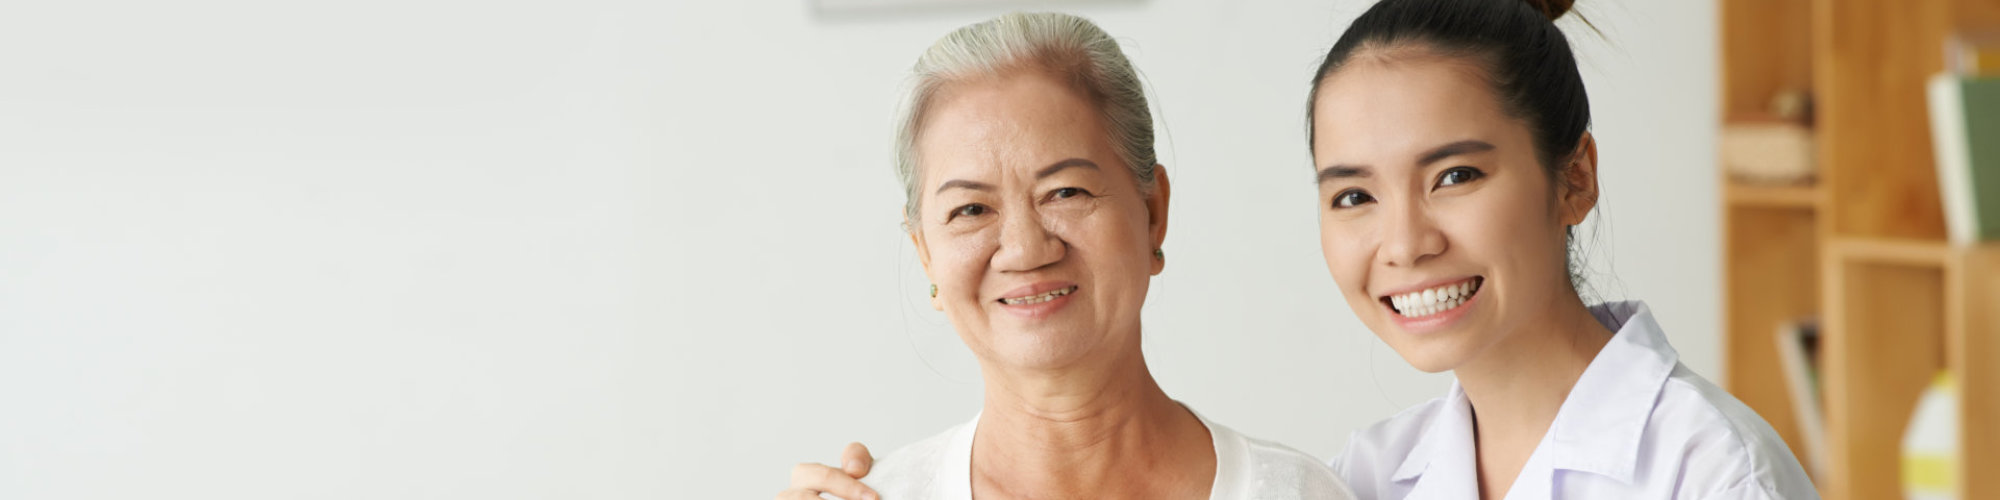 senior patient with homecare